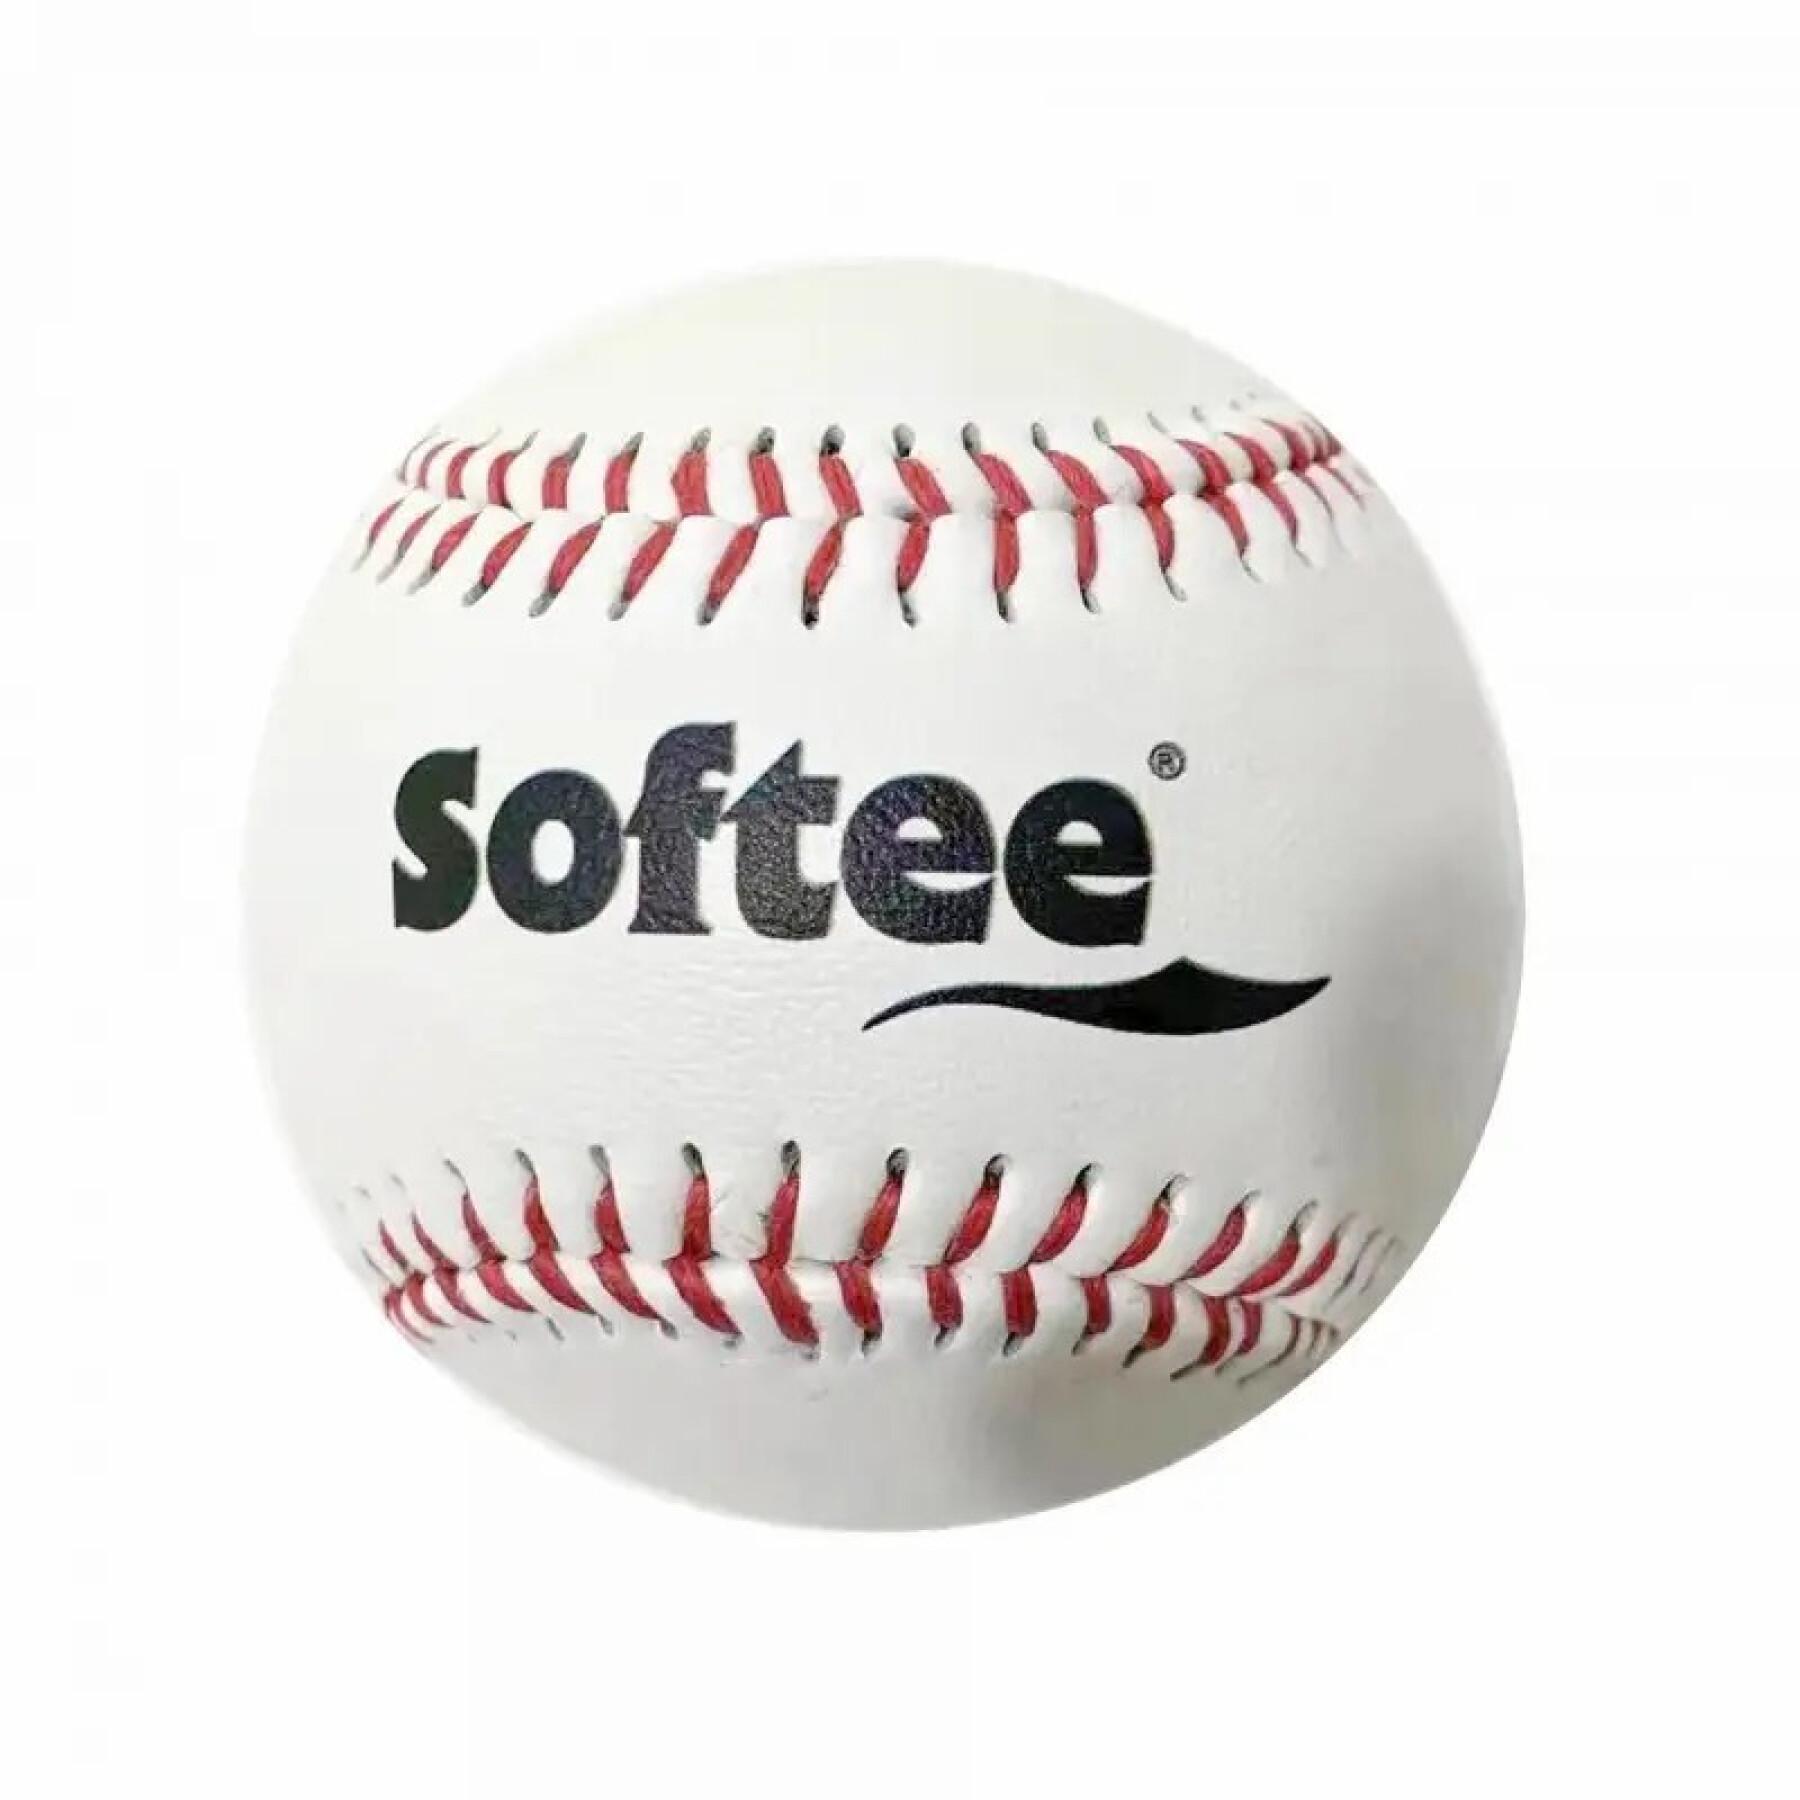 Baseball Softee 9'